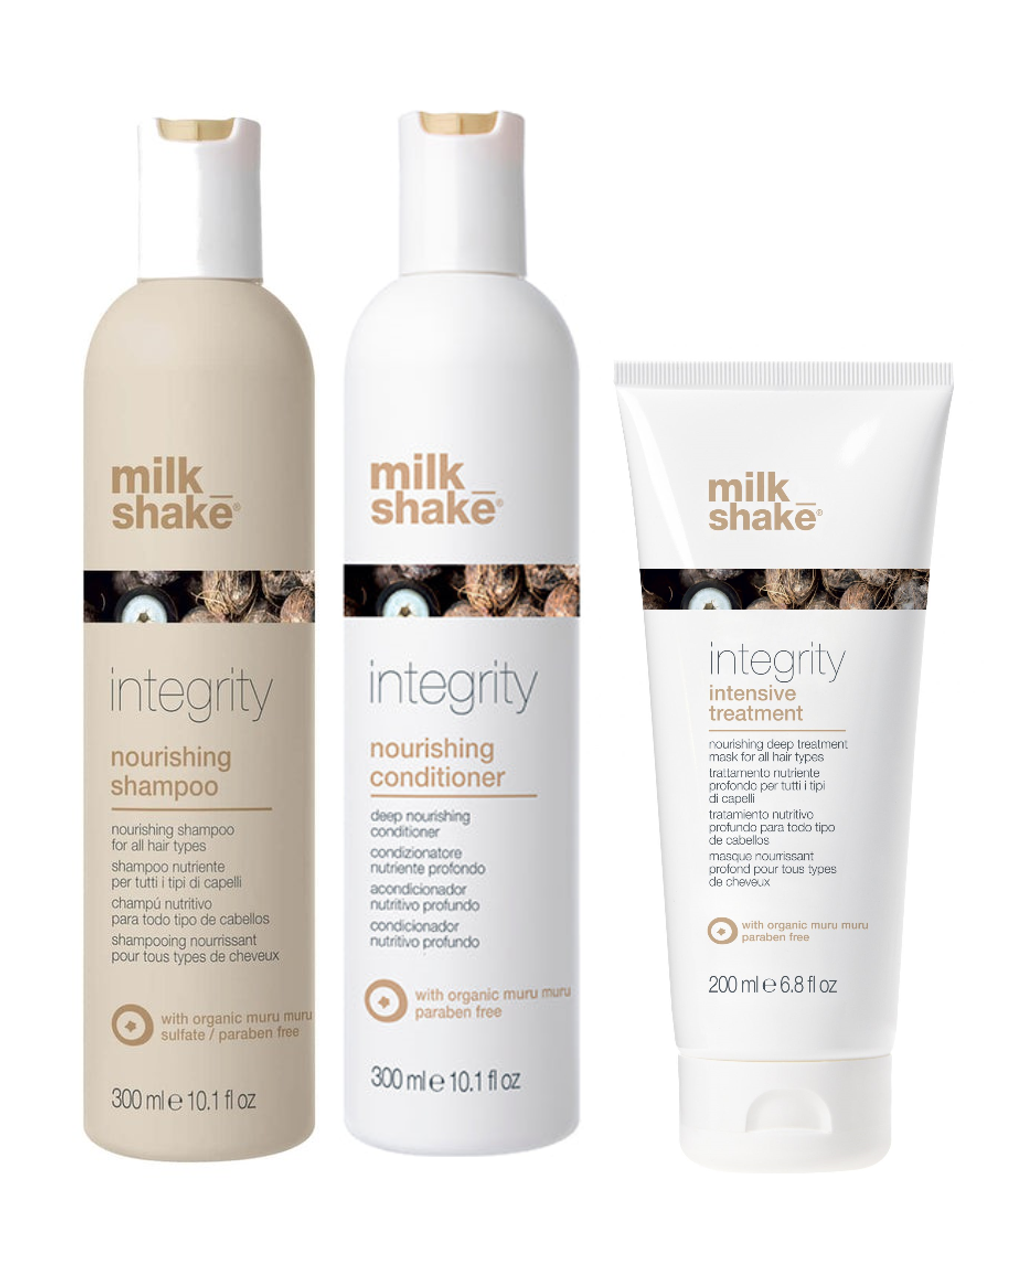 Delvis Alfabet marked Milkshake Integrity Nourishing Shampoo & Conditioner & Intensive Treatment  SleekShop.com